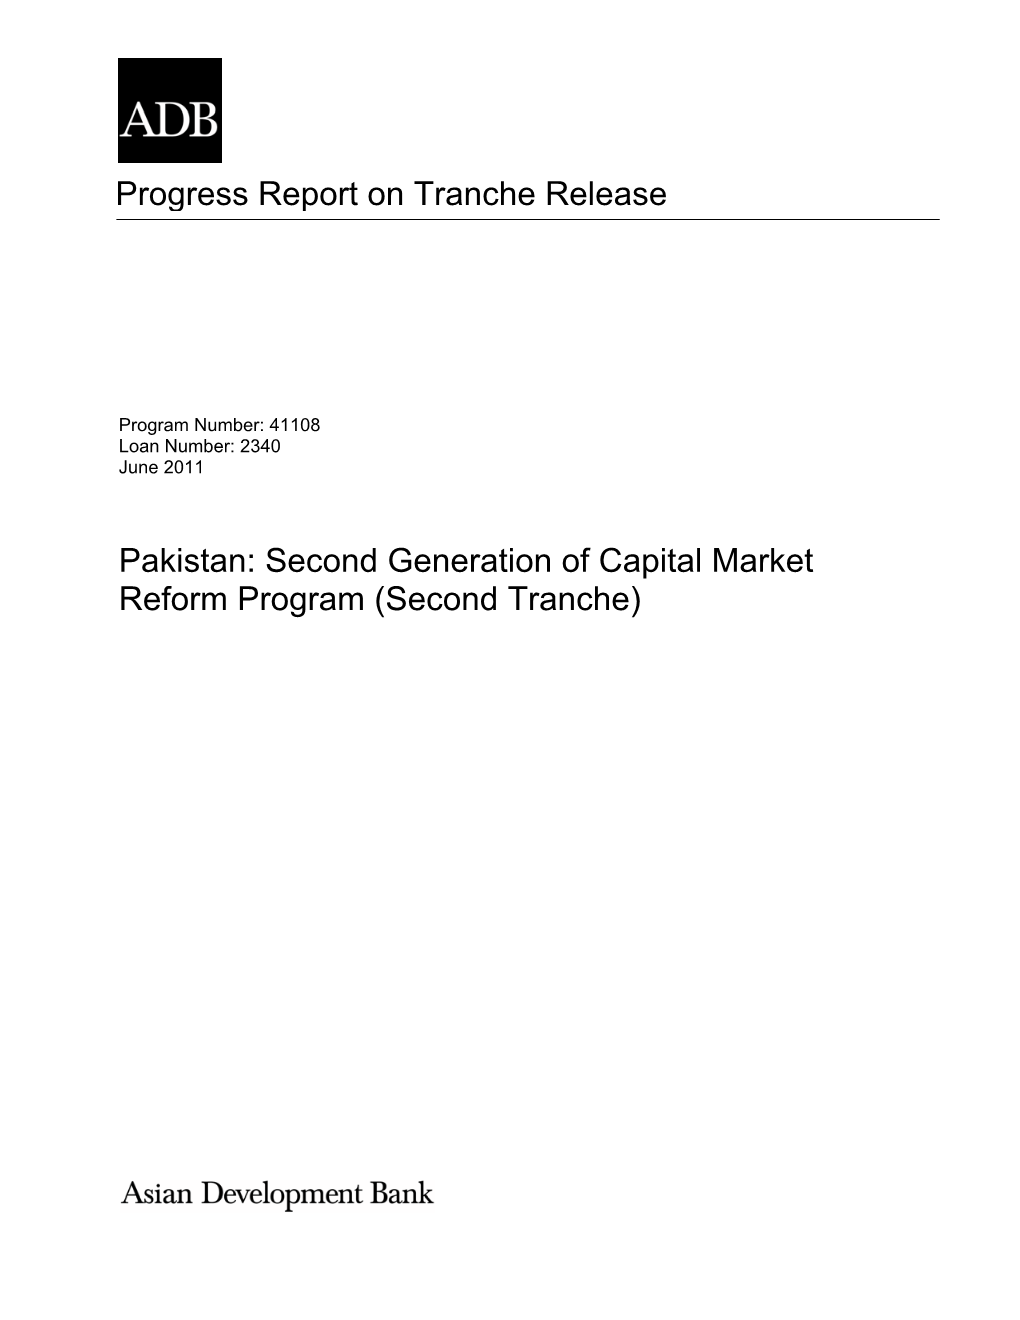 PRTR: Pakistan: Second Generation of Capital Market Reform Program